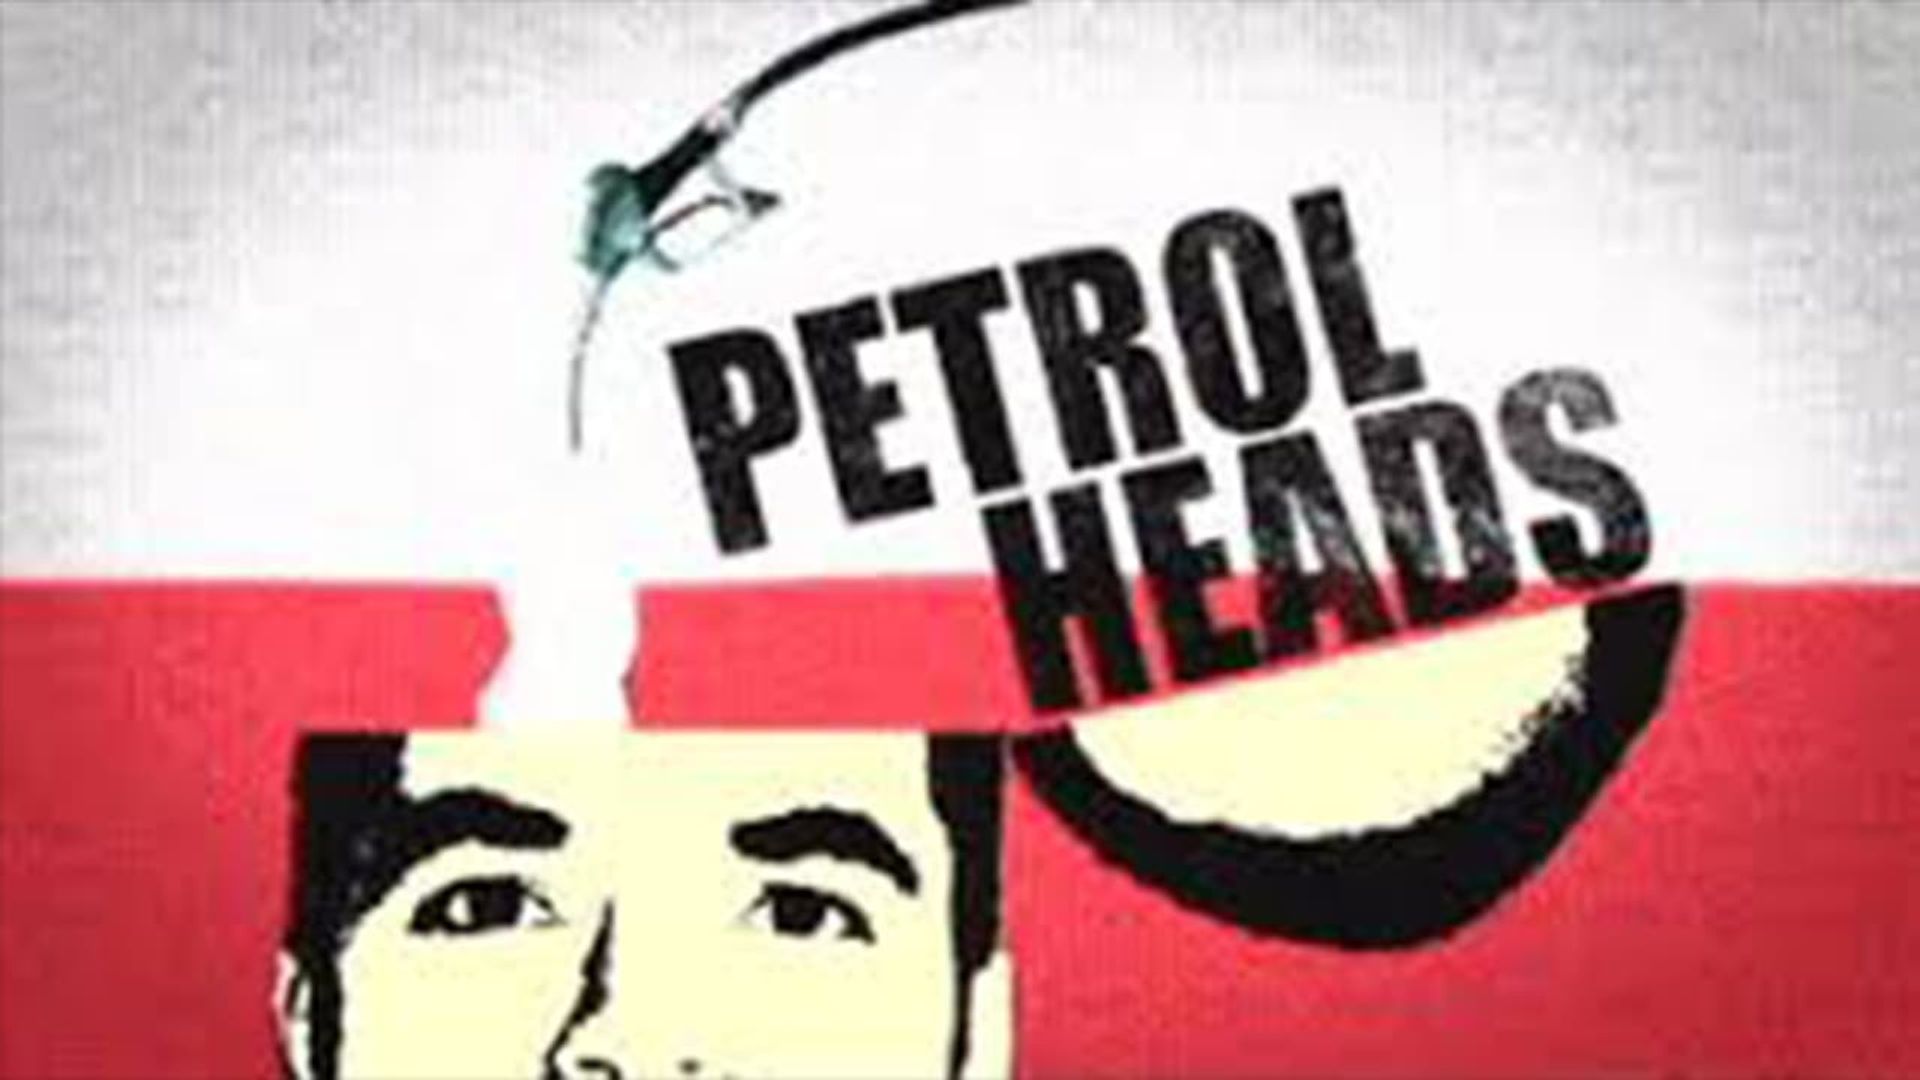 Petrolheads background